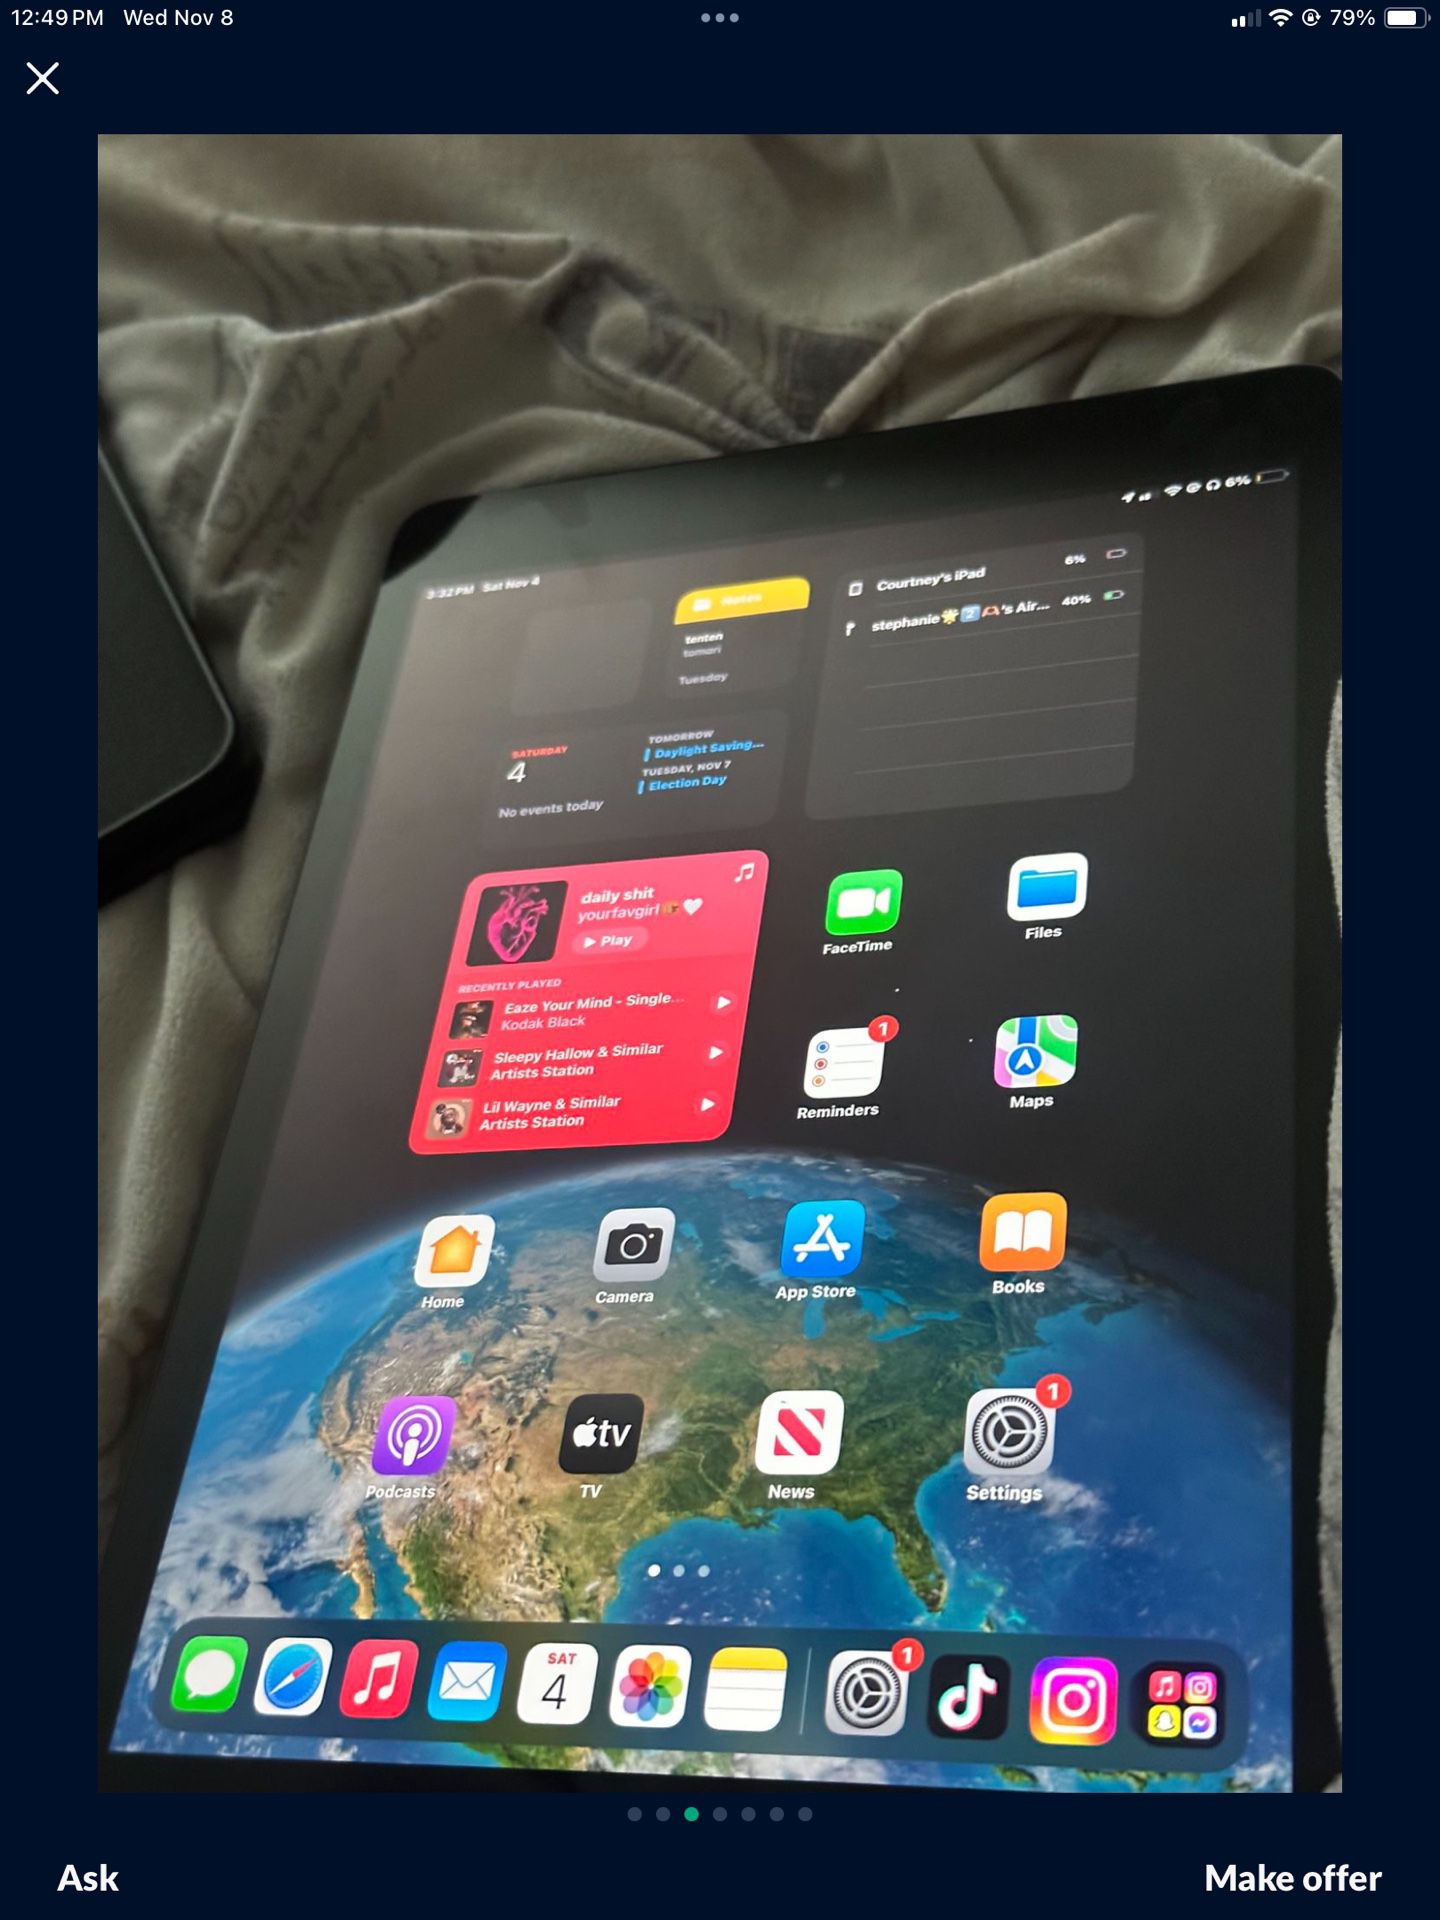 9th Generation iPad 